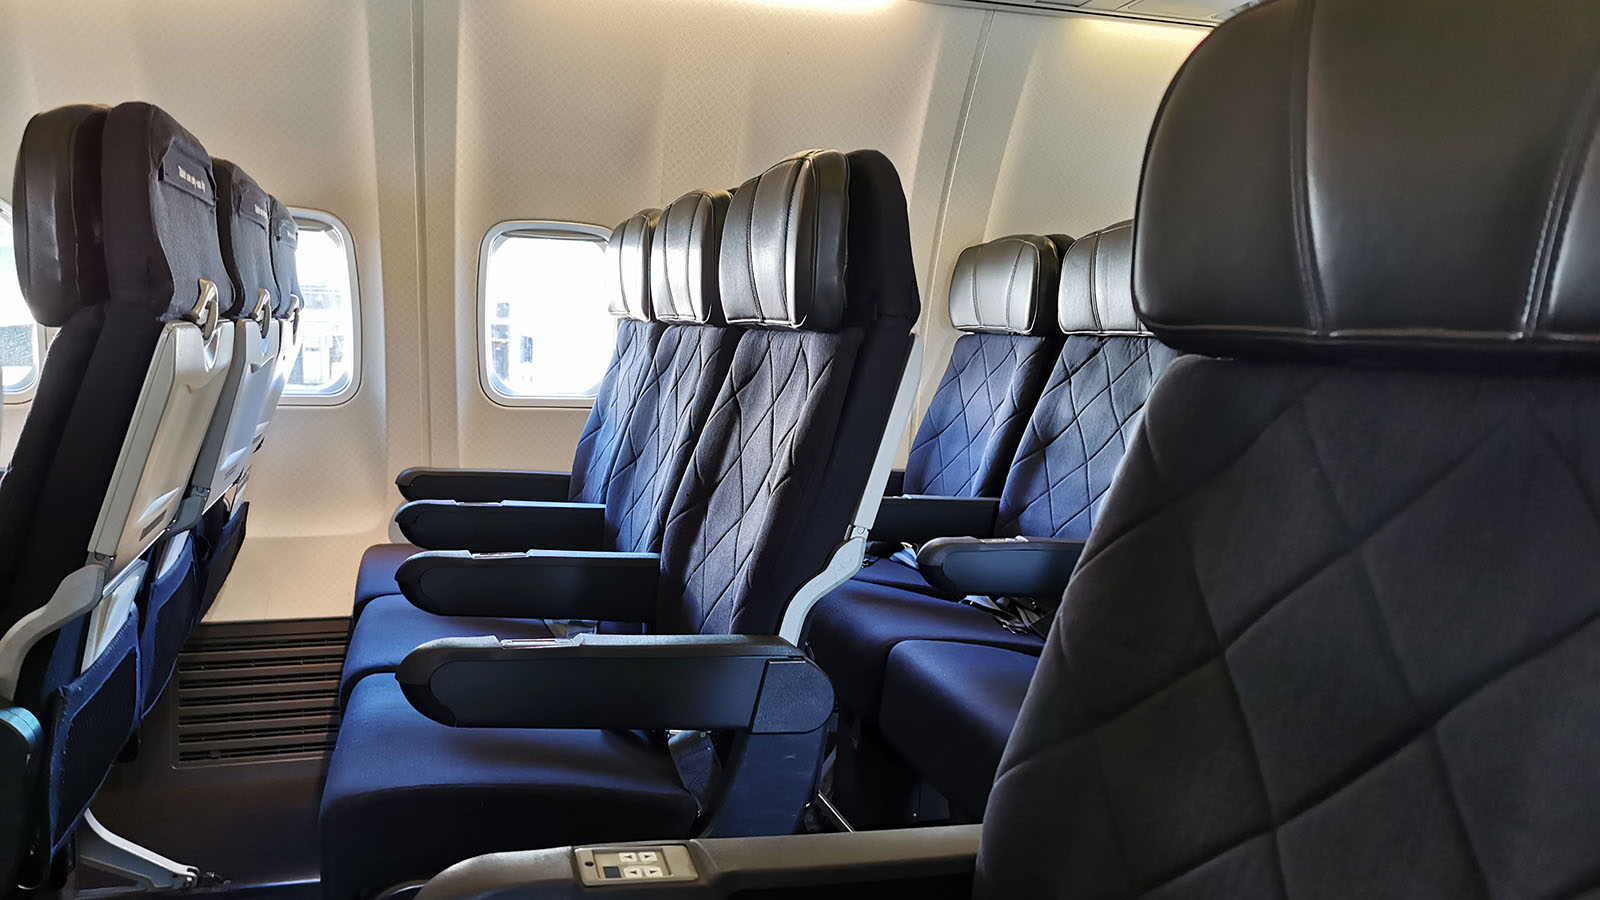 Qantas Boeing 737 Economy seat